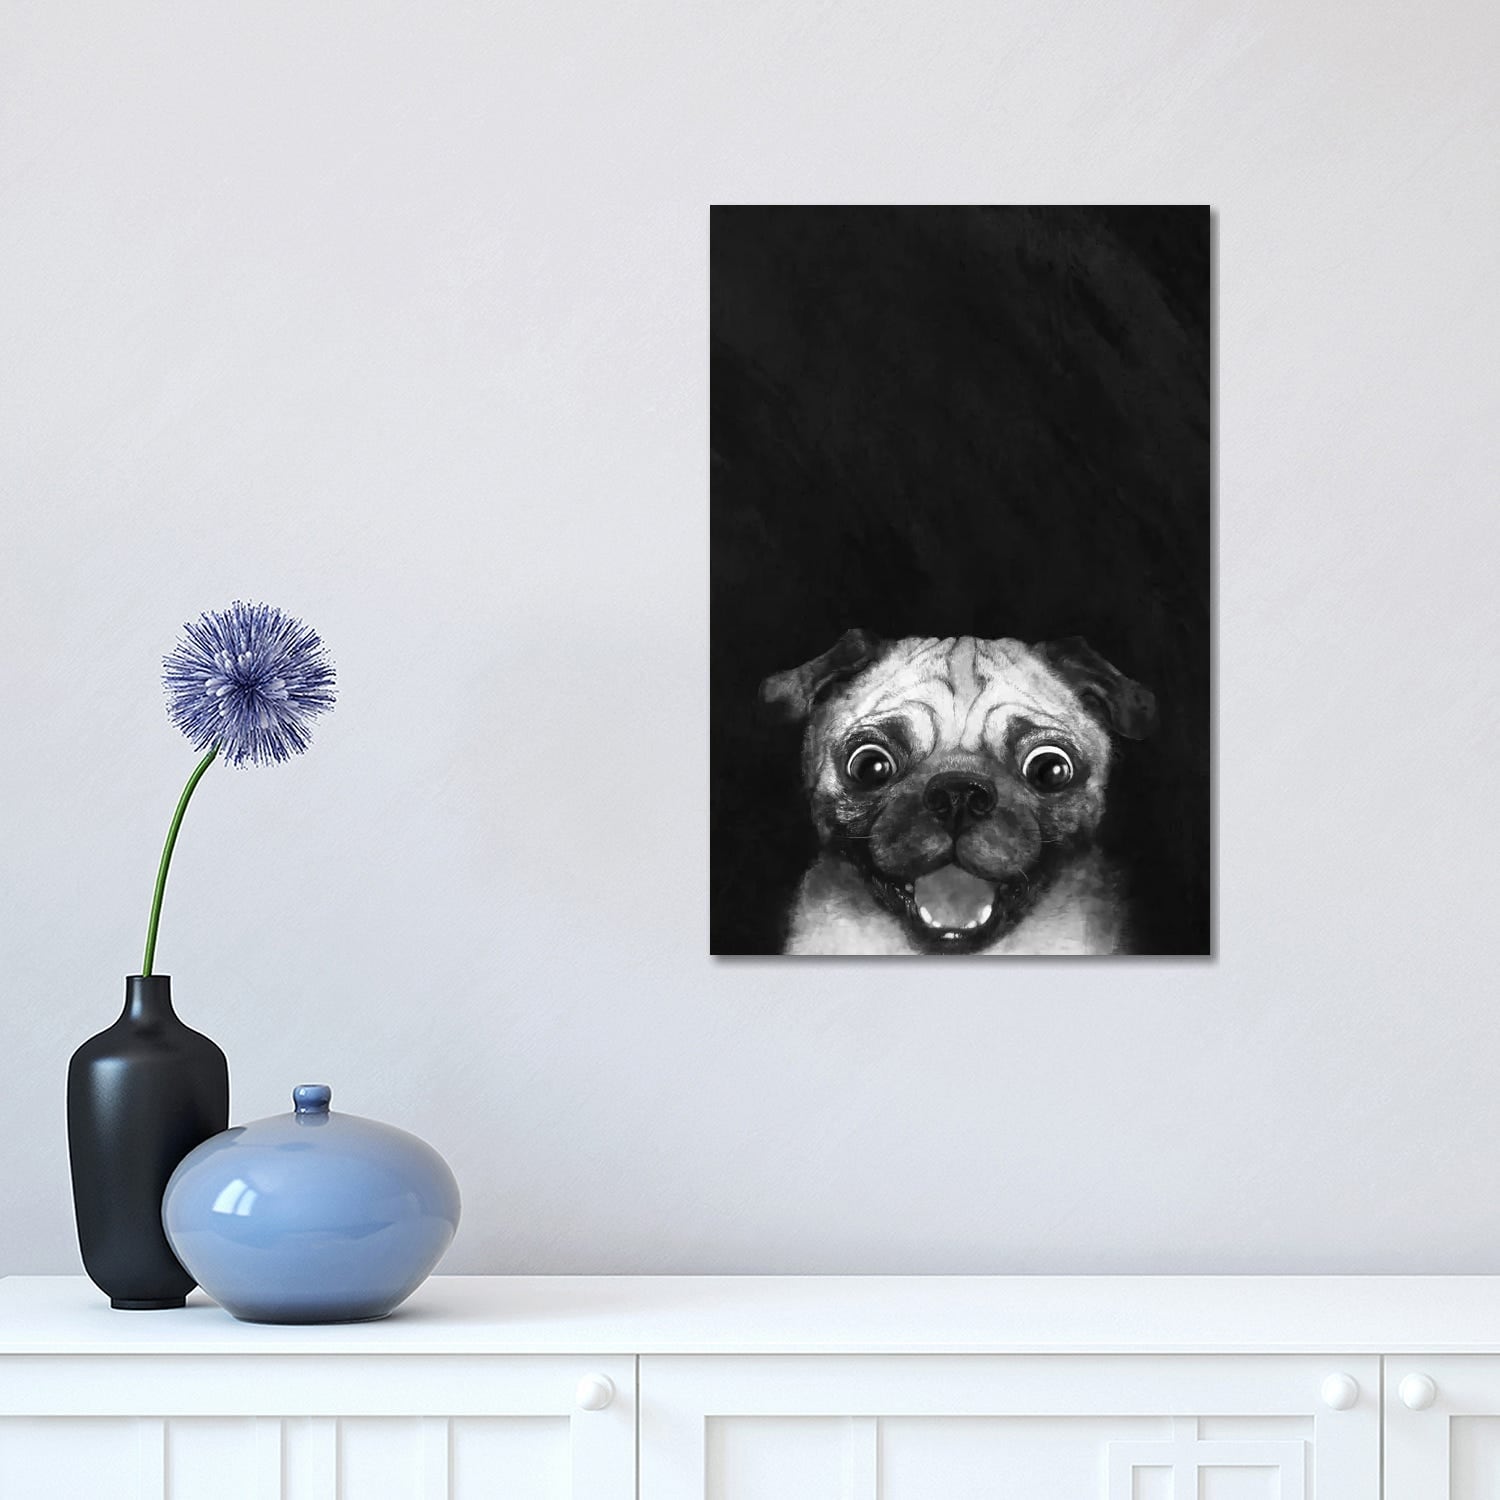 Pet-Wildlife Series Canvas Art - Pug love 12x18 - Multi - Bed Bath & Beyond  - 33605212